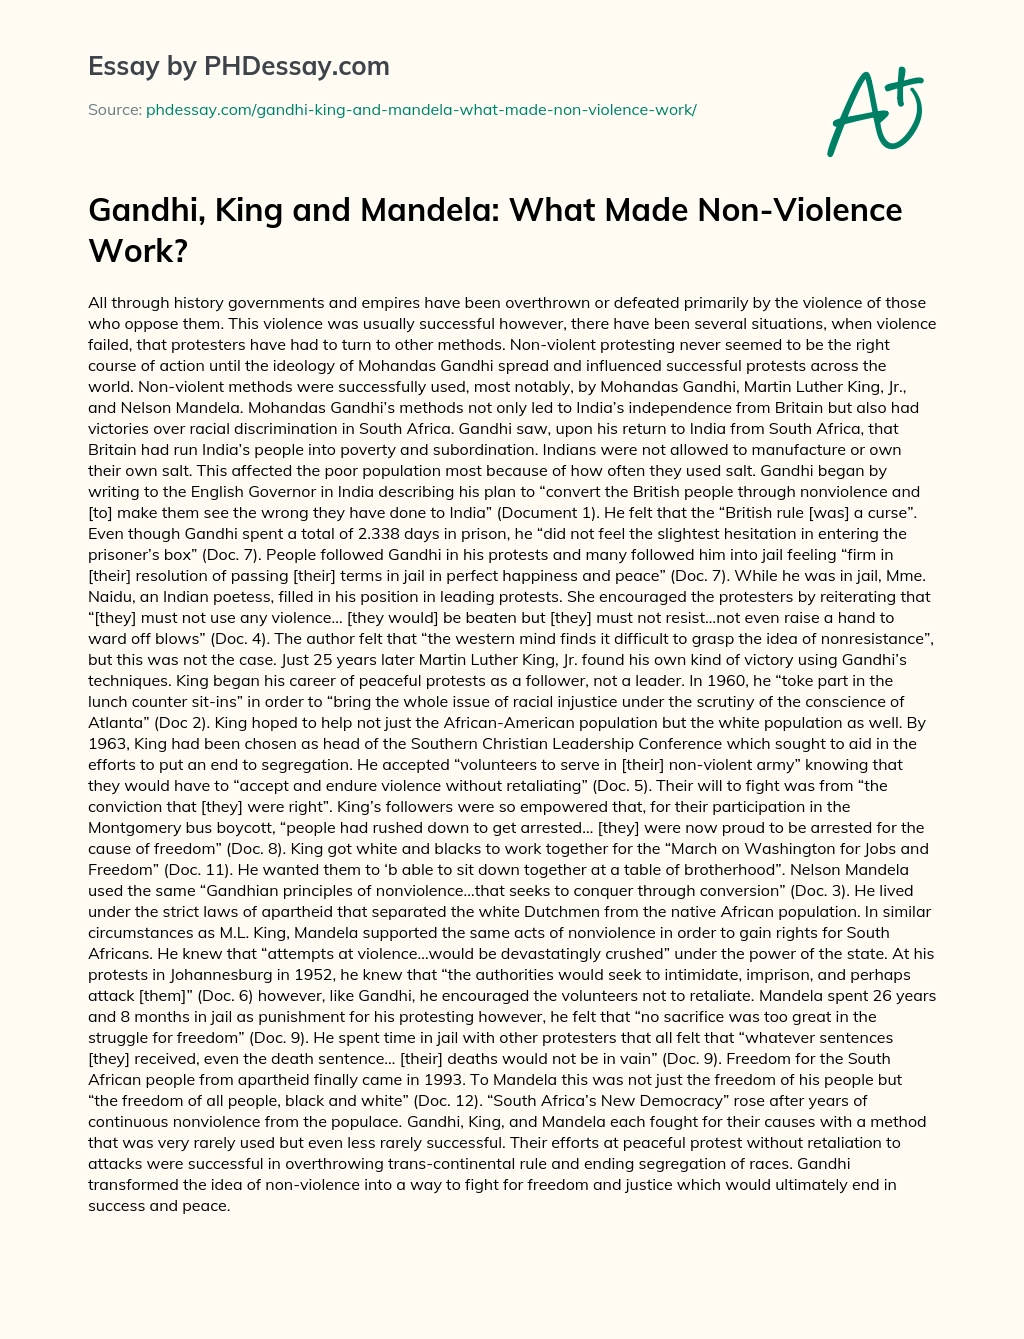 Gandhi, King and Mandela: What Made Non-Violence Work? essay